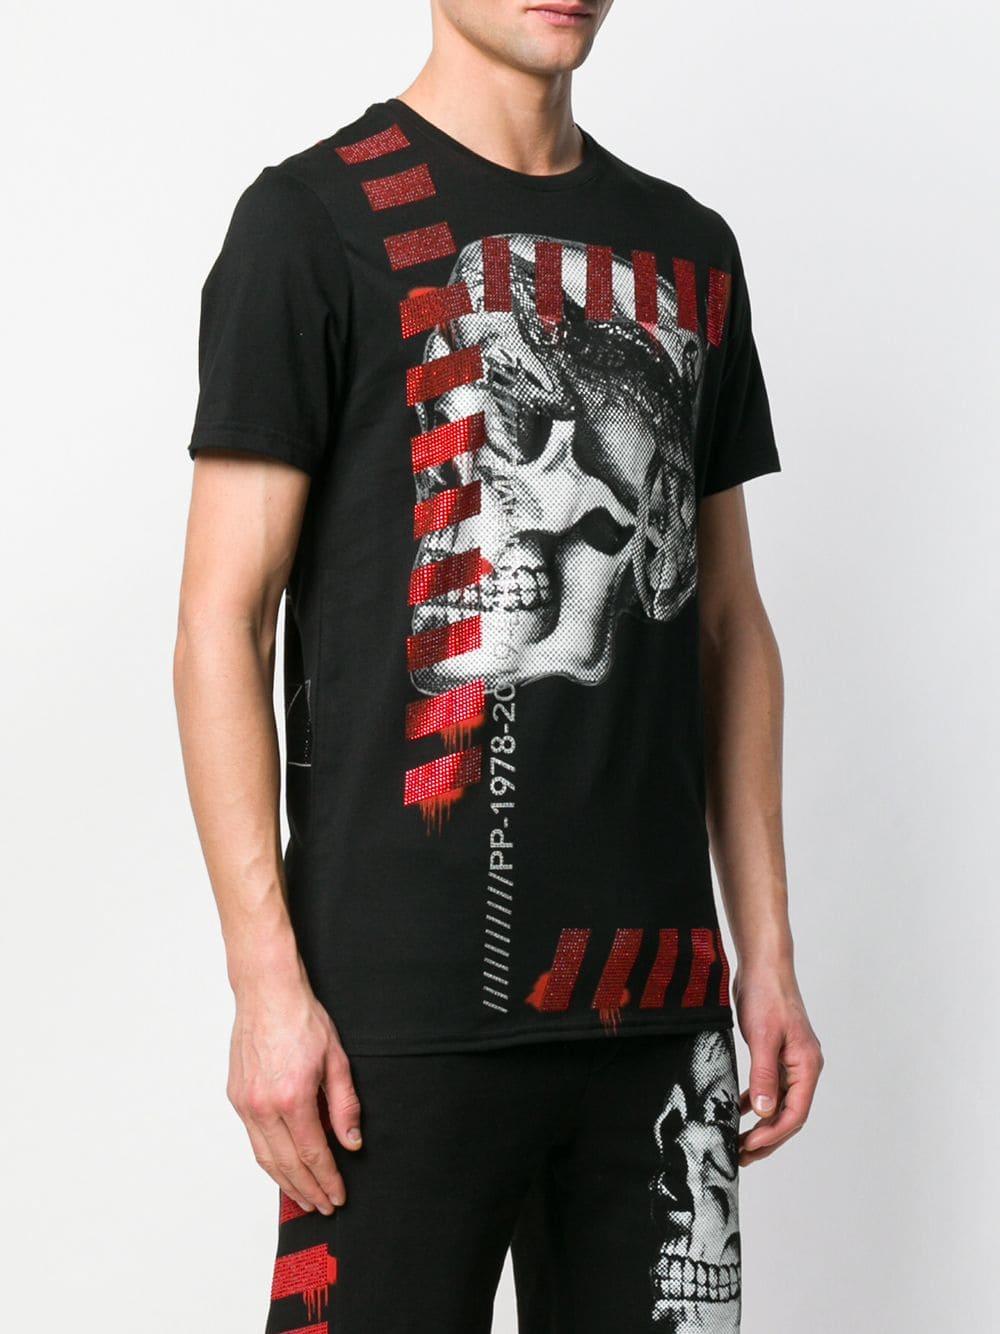 Philipp Plein Cotton Skull Print T-shirt in Black for Men - Lyst